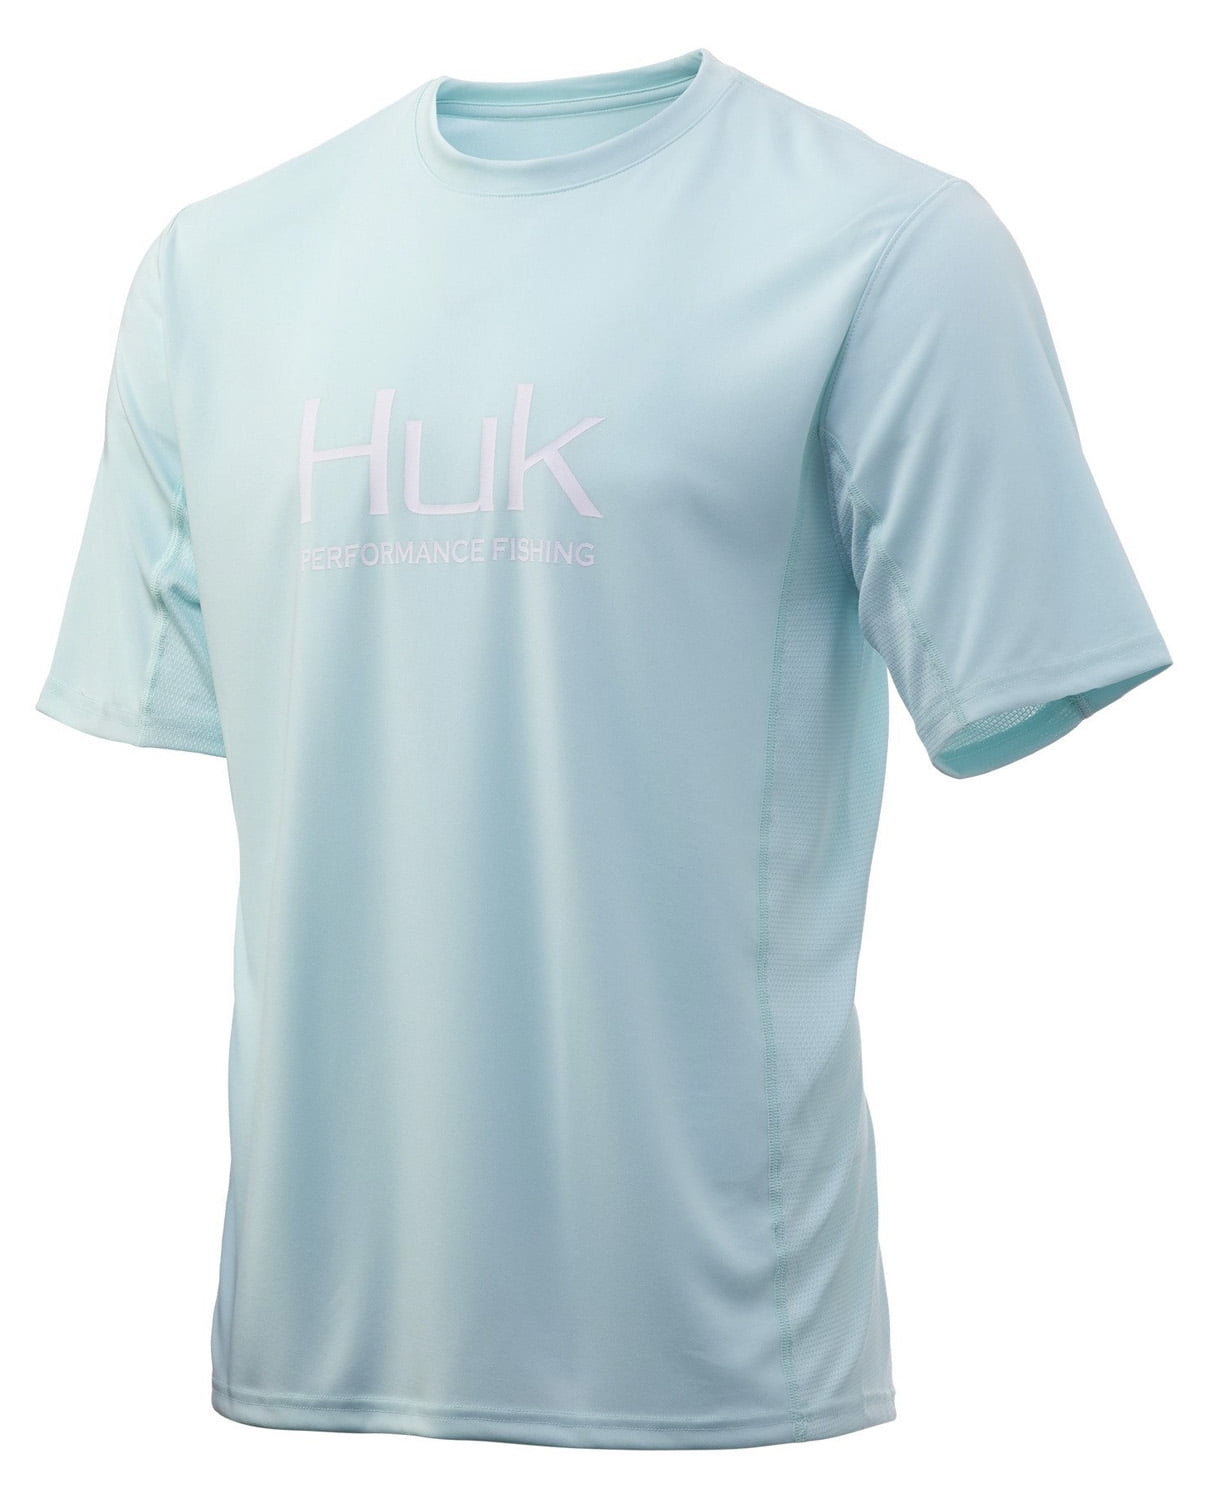 Huk Men's Icon x White Small Short Sleeve Performance Fishing Shirt